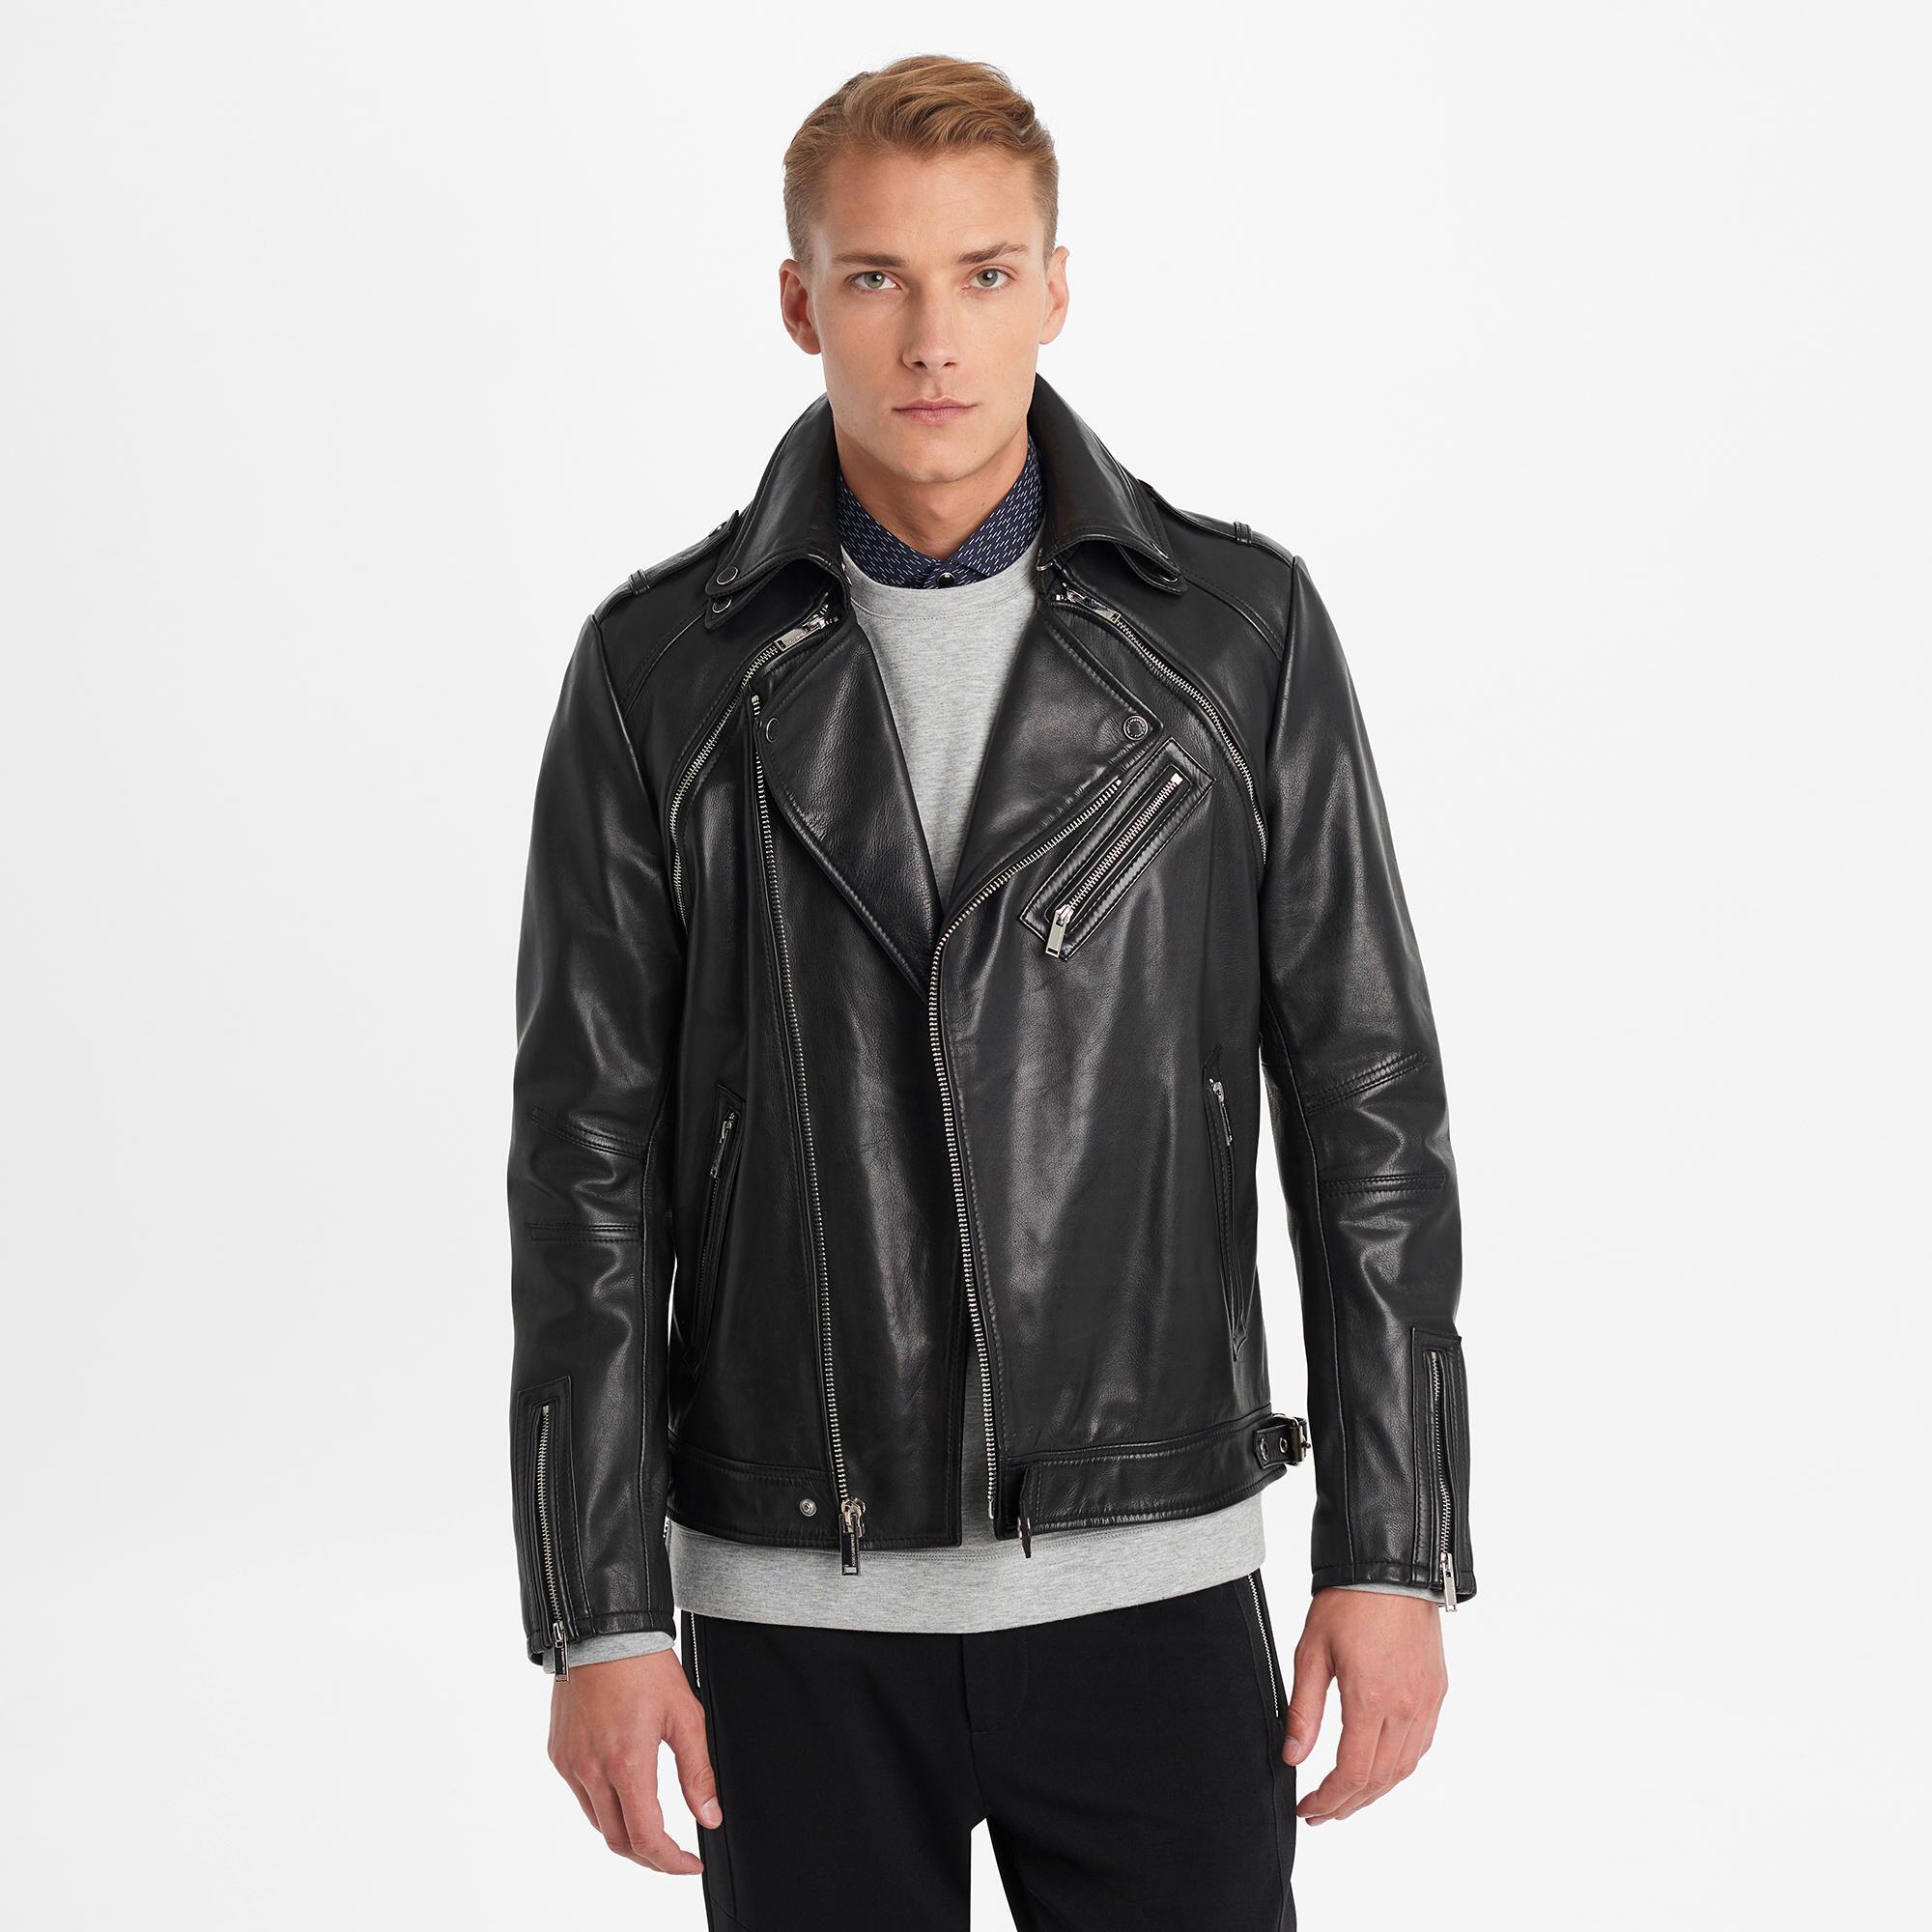 Karl Lagerfeld Asymmetrical Leather Jacket in Black for Men - Lyst